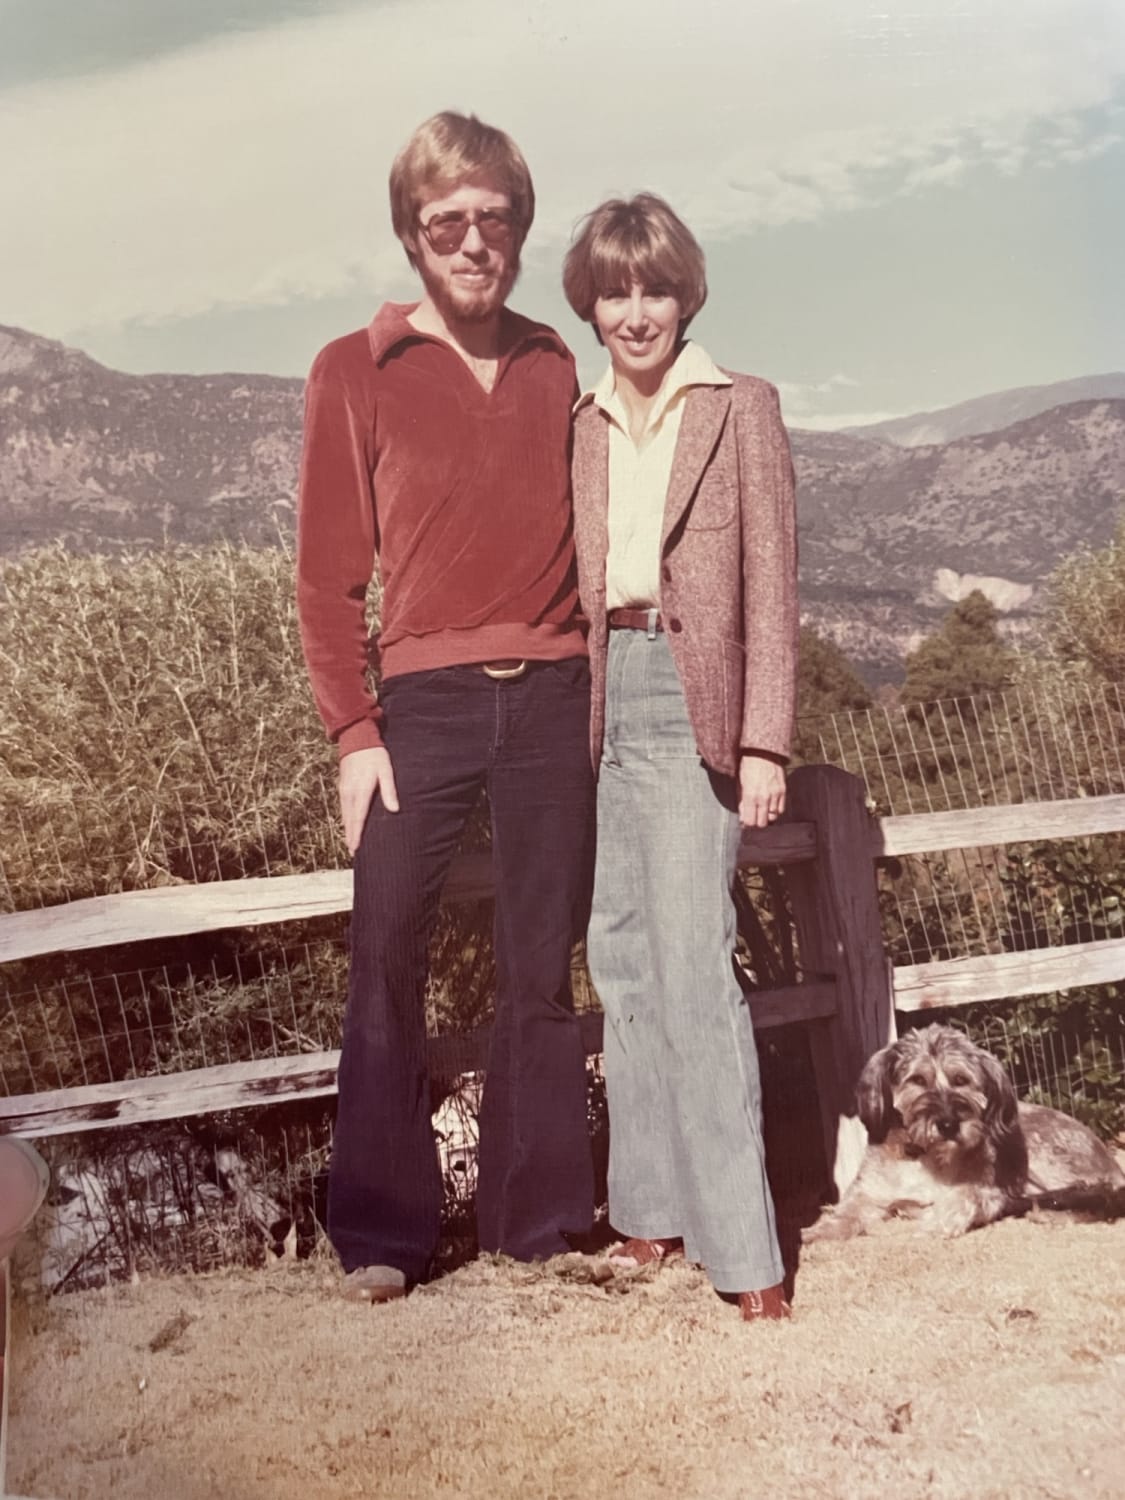 My grandparents (1970s)